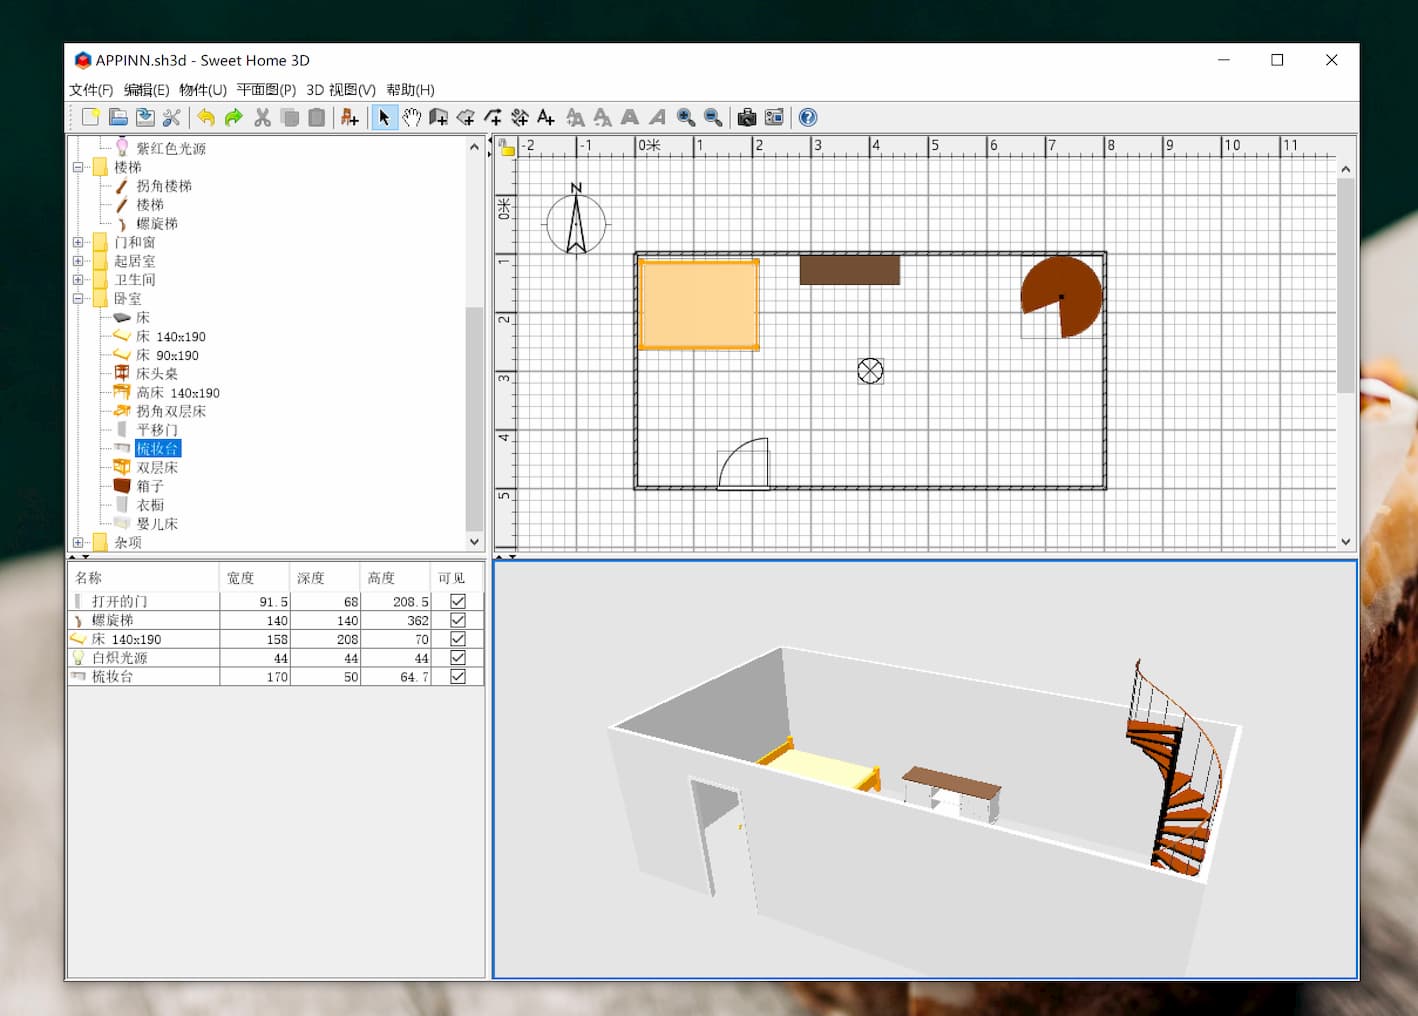 Sweet Home 3D - 拖拽就能创建 3D 效果的装修图，免费开源很好用 2